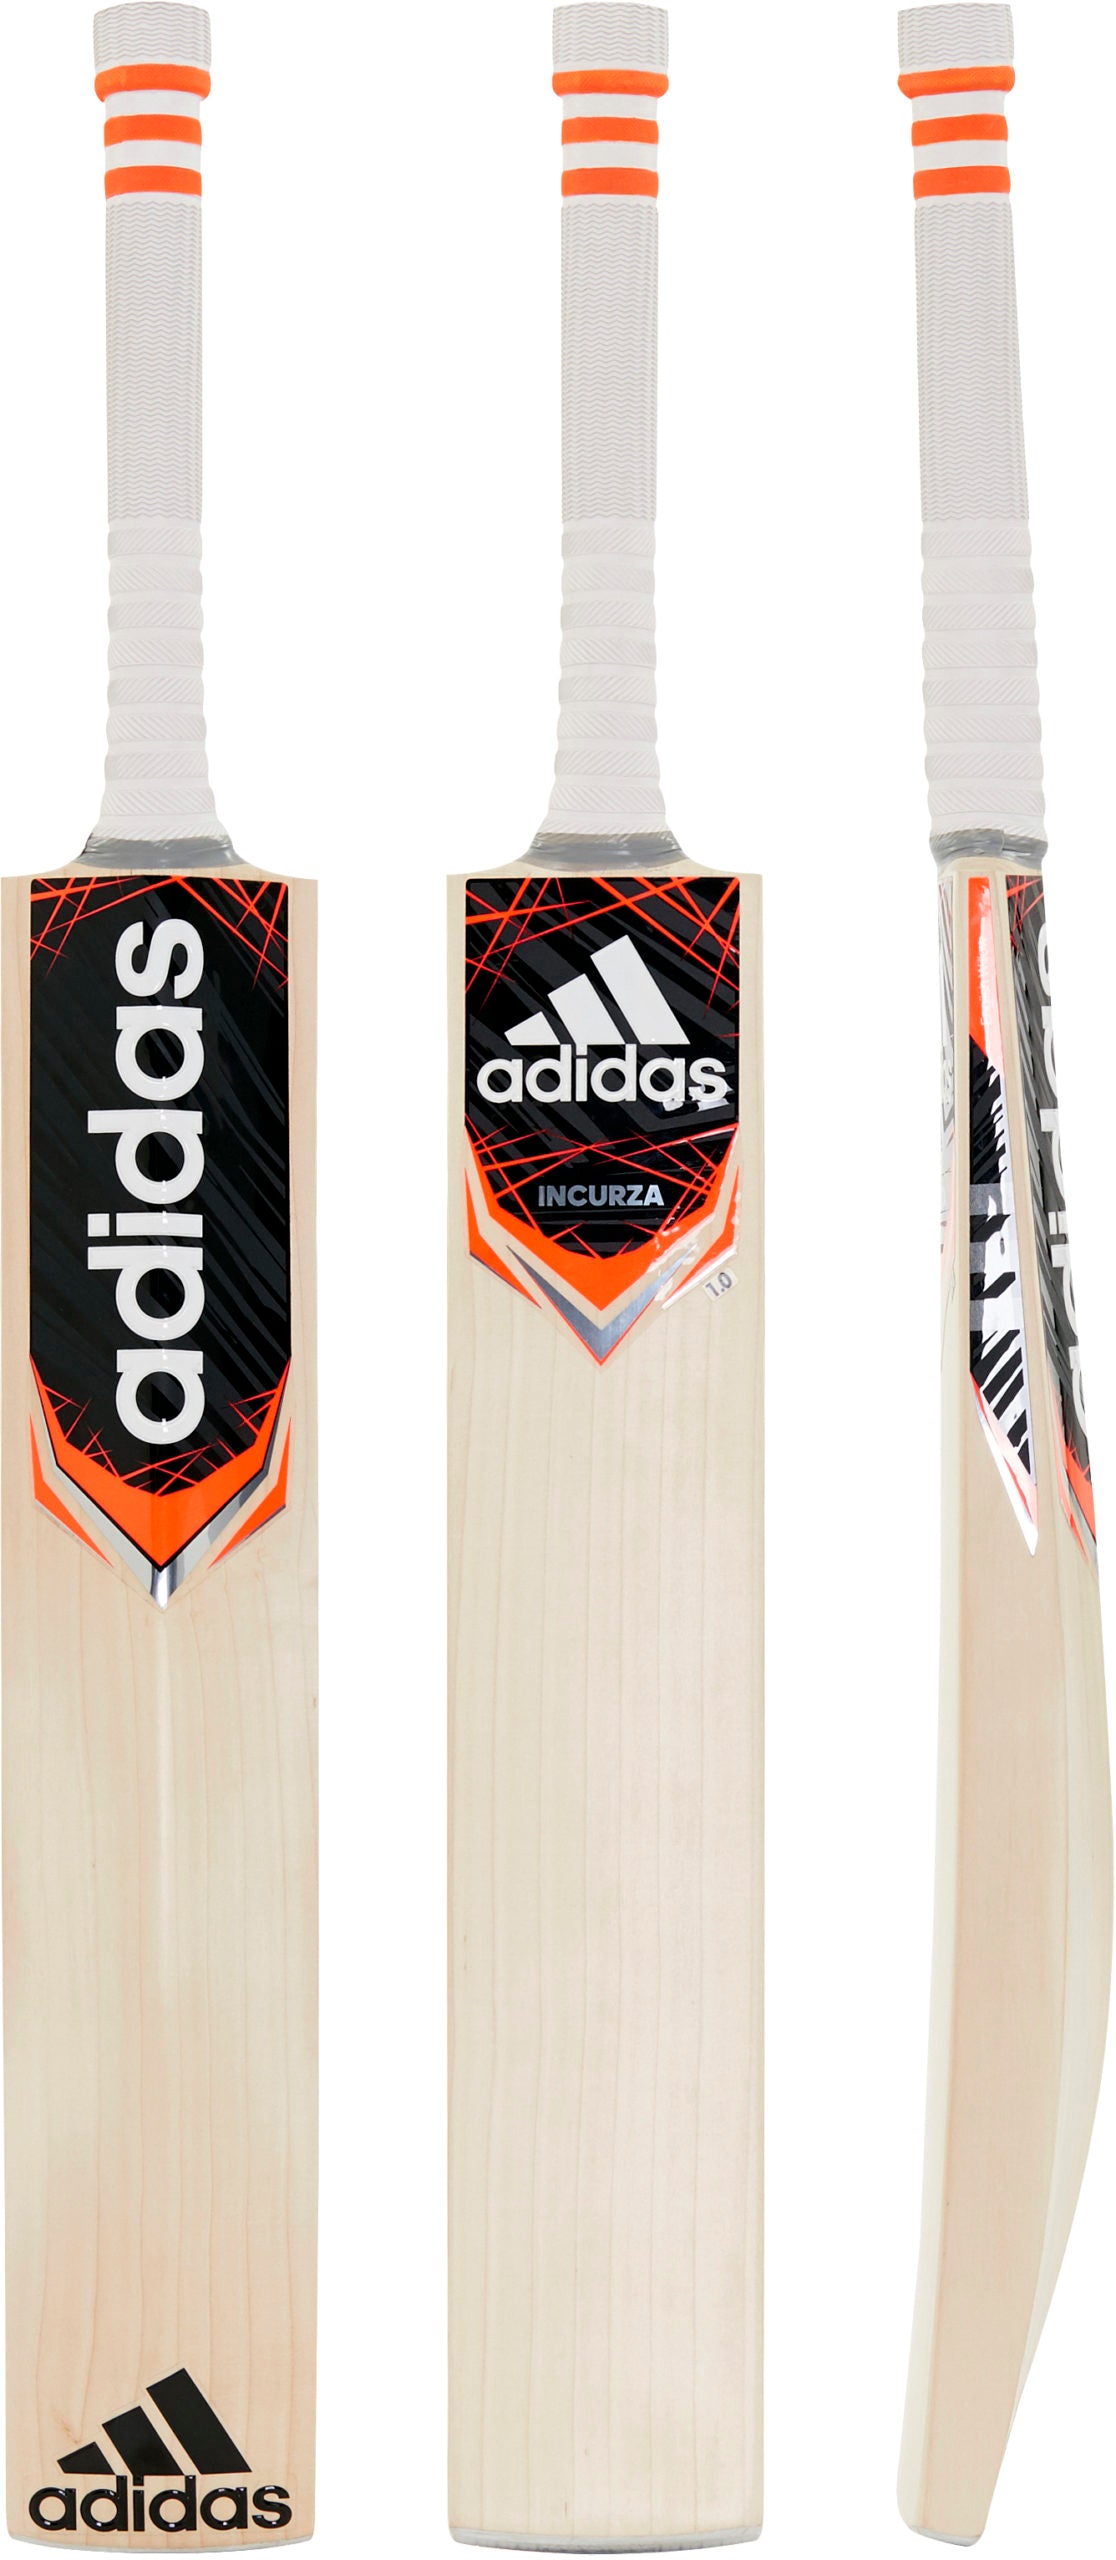 Adidas Incurza 1.0 Kashmir Willow Cricket Bat